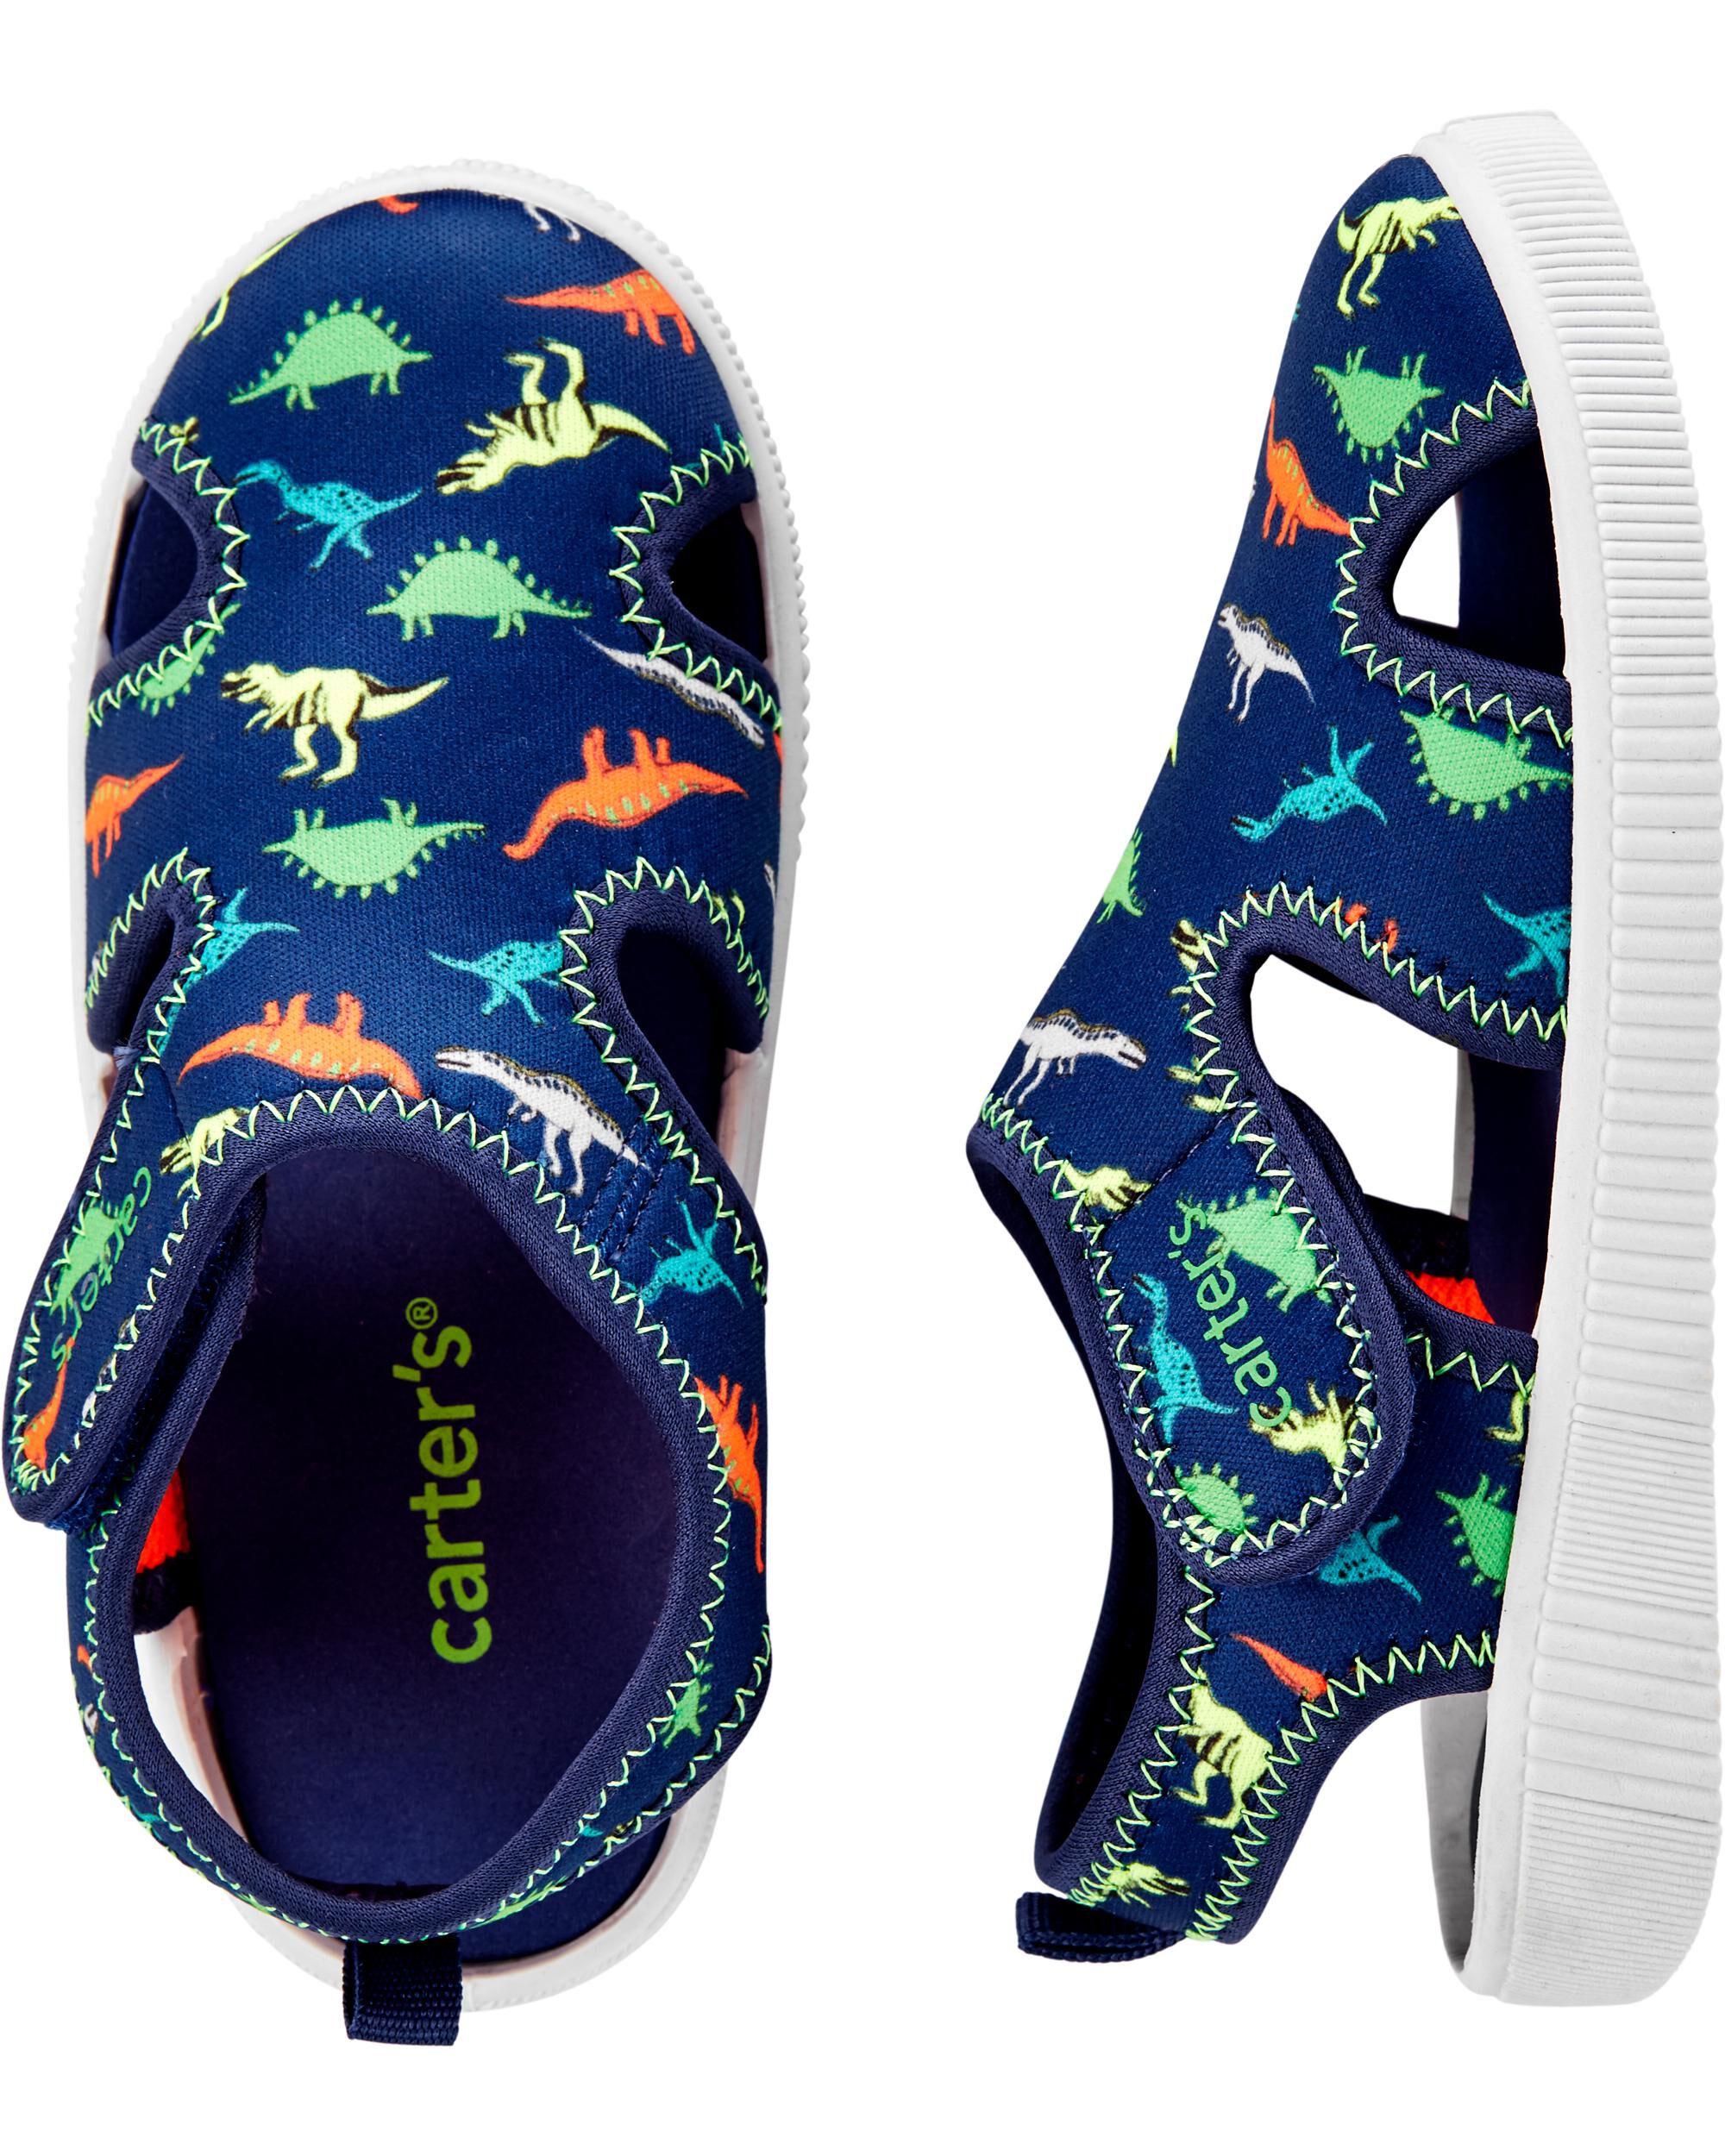 Carter's Dinosaur Water Shoes | carters.com